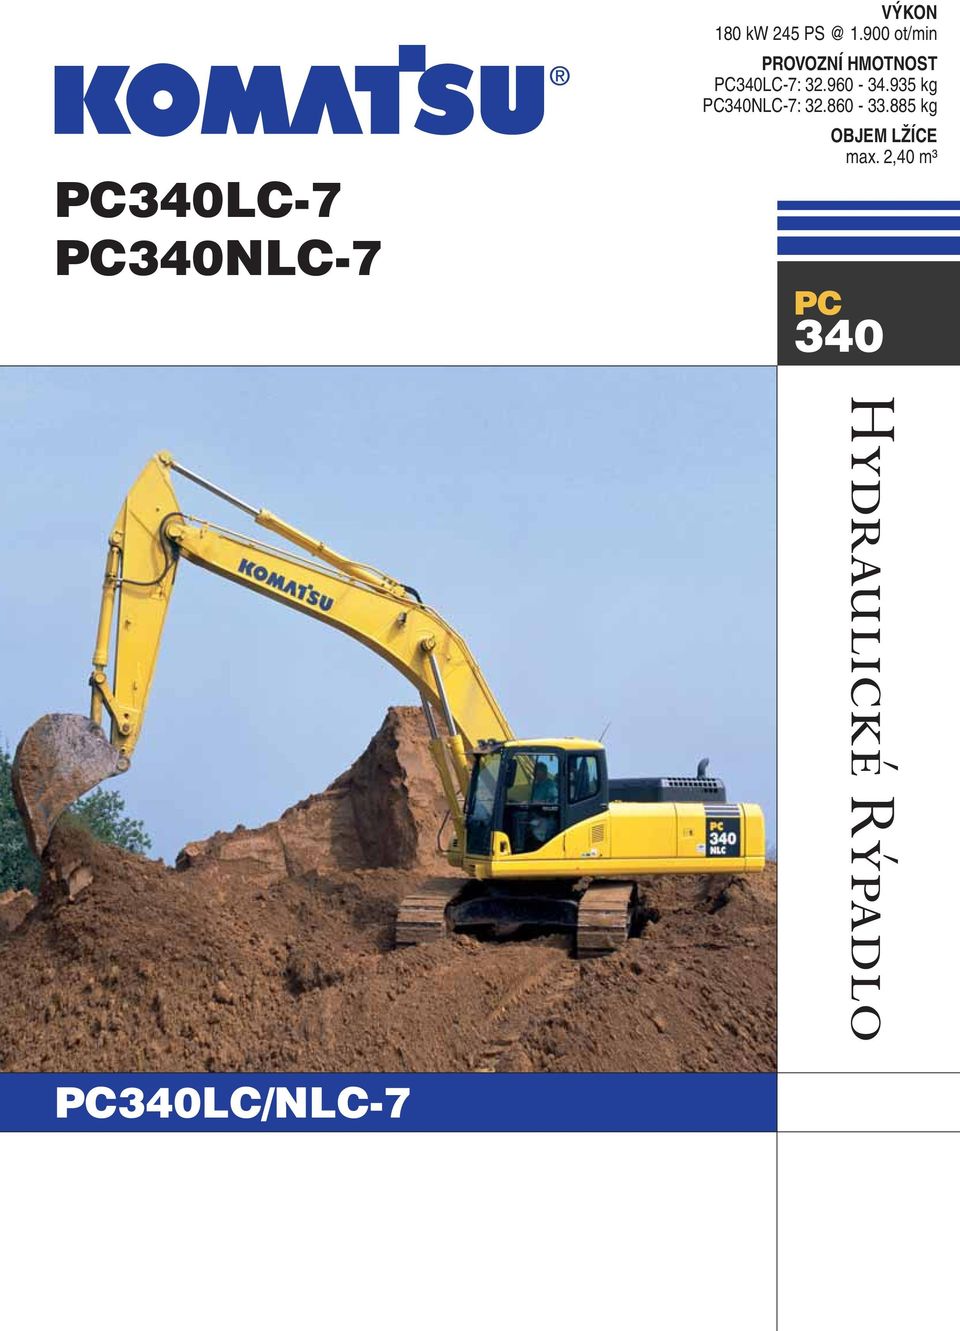 960-34.935 kg PC340NLC-7: 32.860-33.